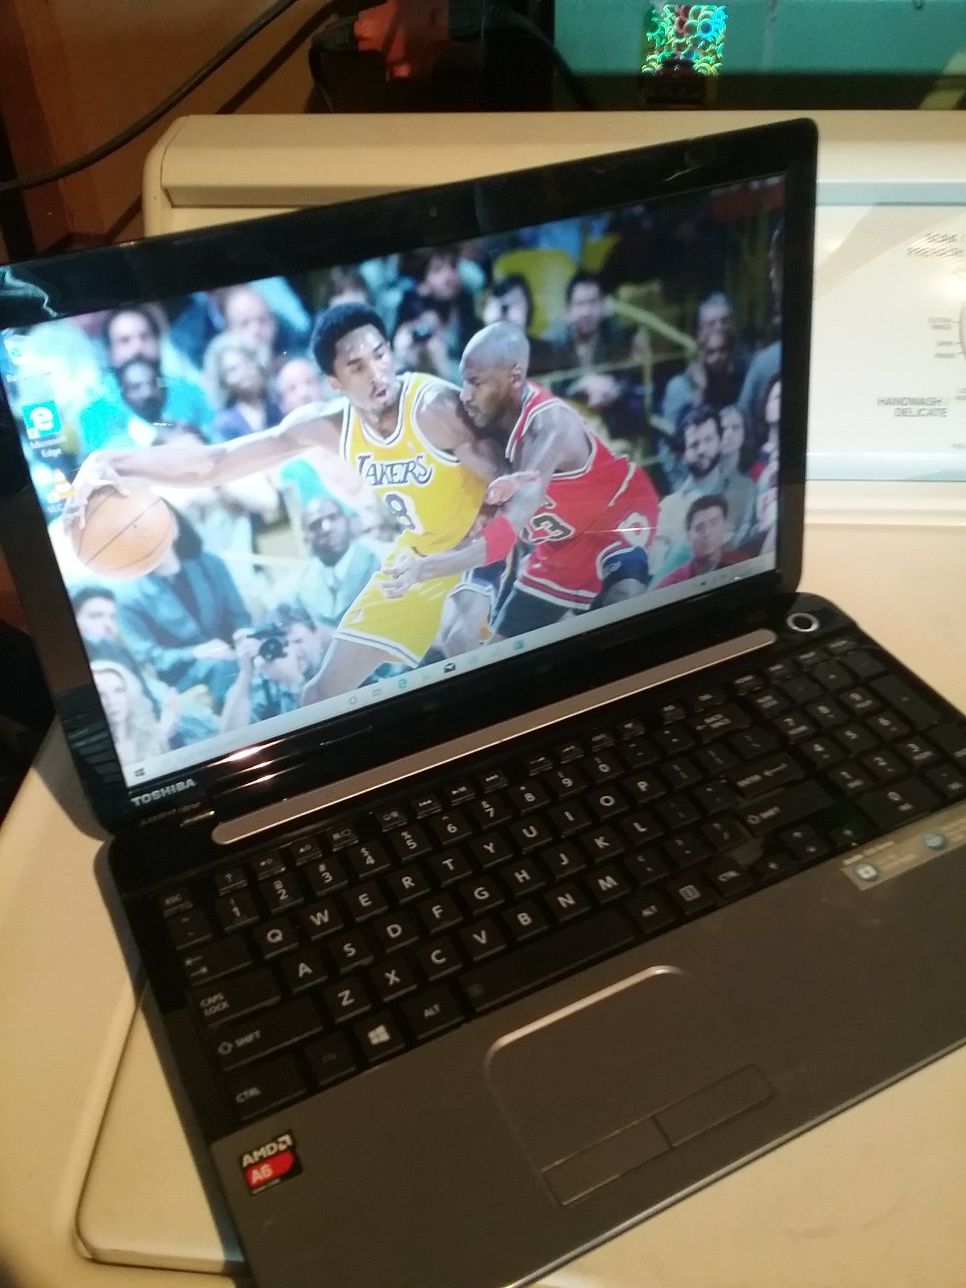 Toshiba Satelite C55 Windows 10 Laptop with Microsoft Office, WiFi and Webcam